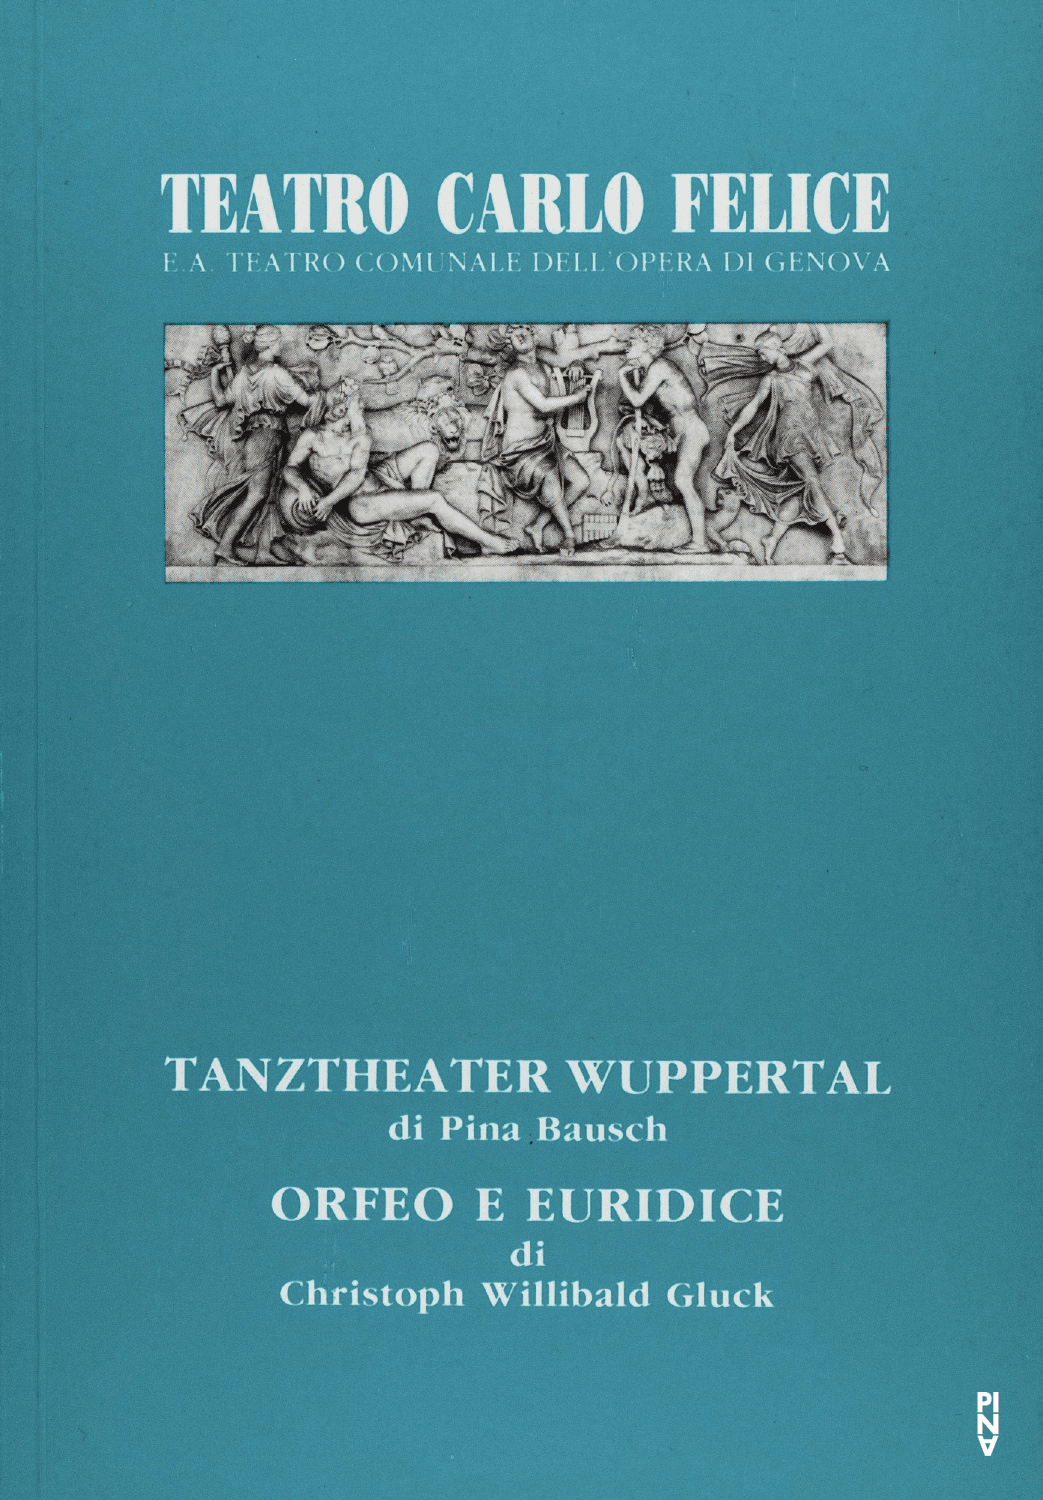 Programme pour « Orpheus und Eurydike » de Pina Bausch avec Tanztheater Wuppertal à Gênes, 7 juil. 1994 – 10 juil. 1994